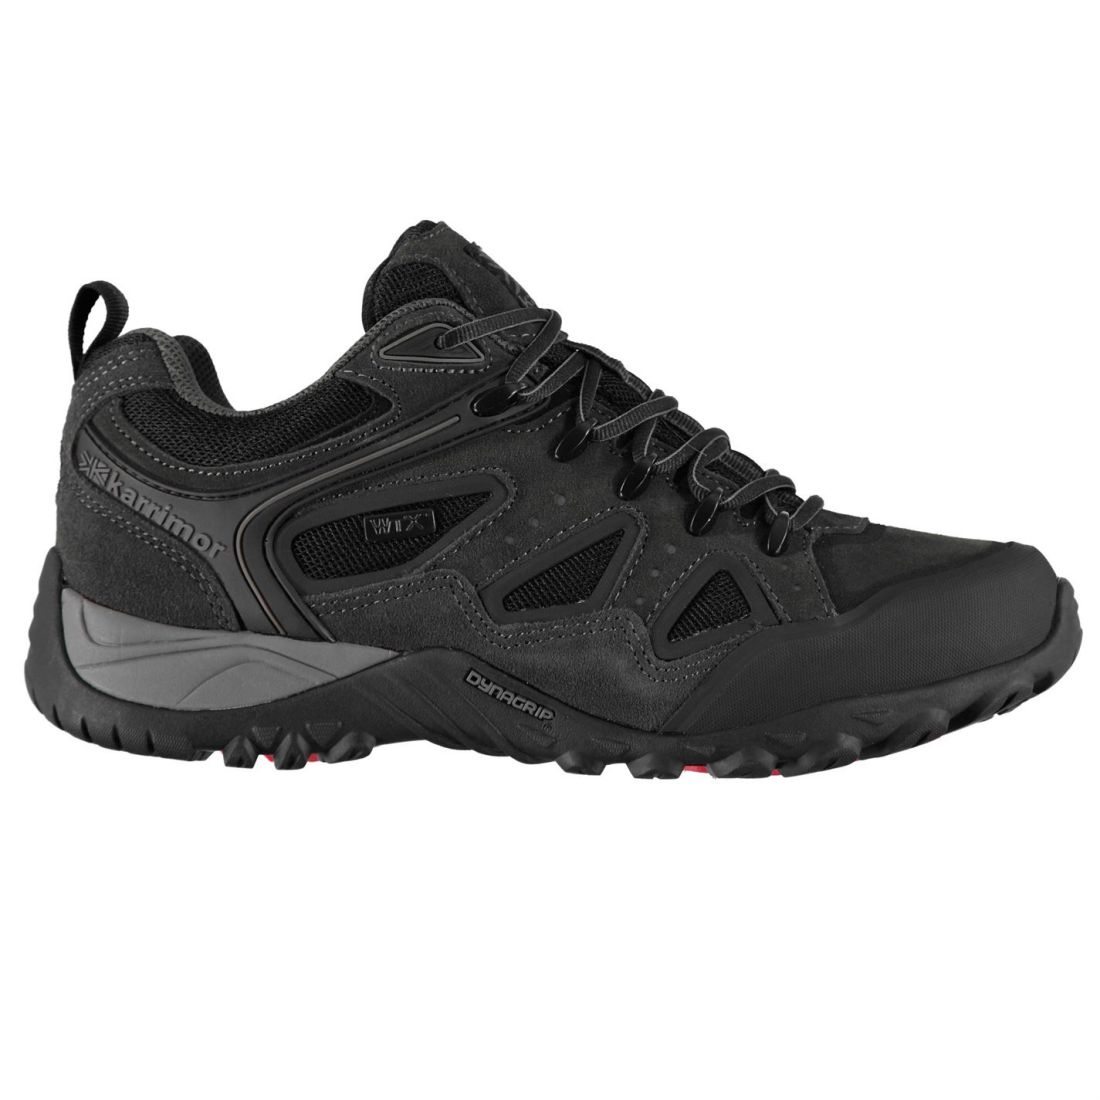 Karrimor Mens Ridge WTX Walking Shoes Waterproof Lace Up Breathable ...